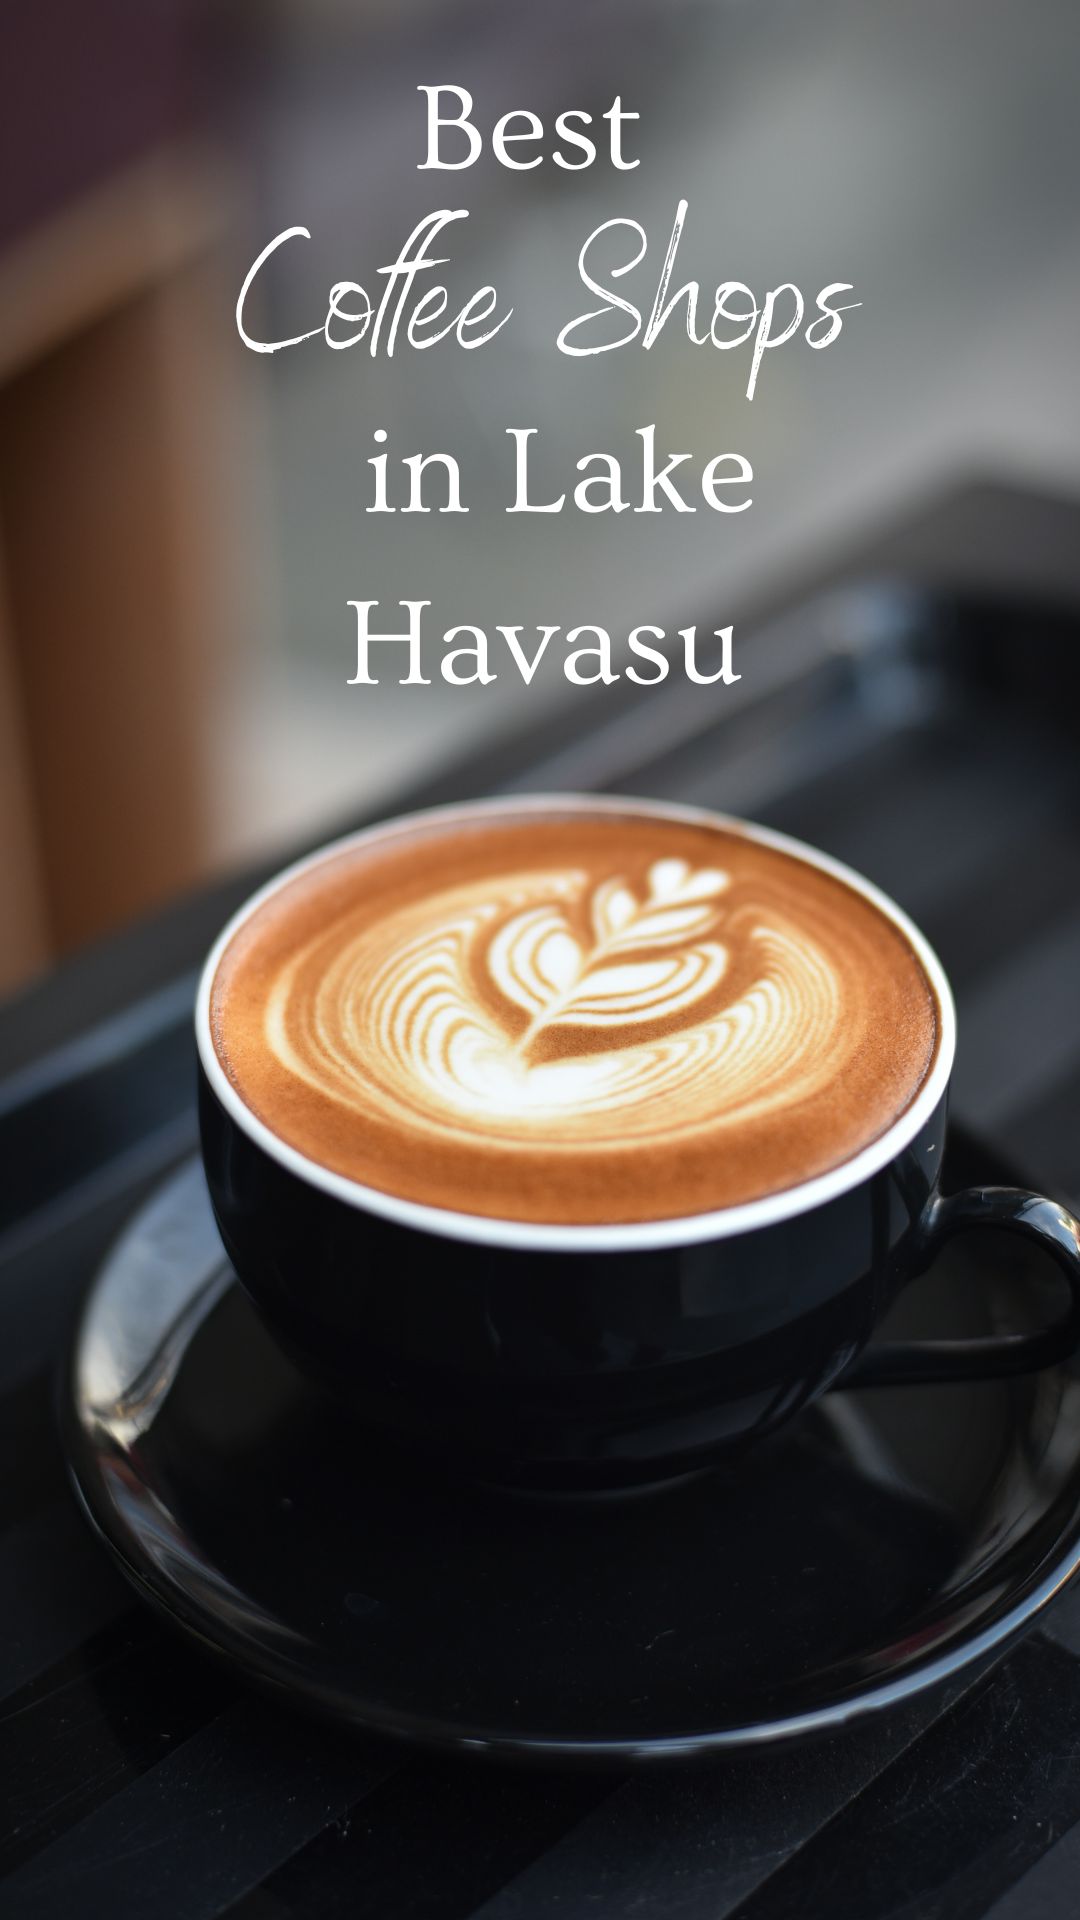 Best Coffee Shops in Lake Havasu